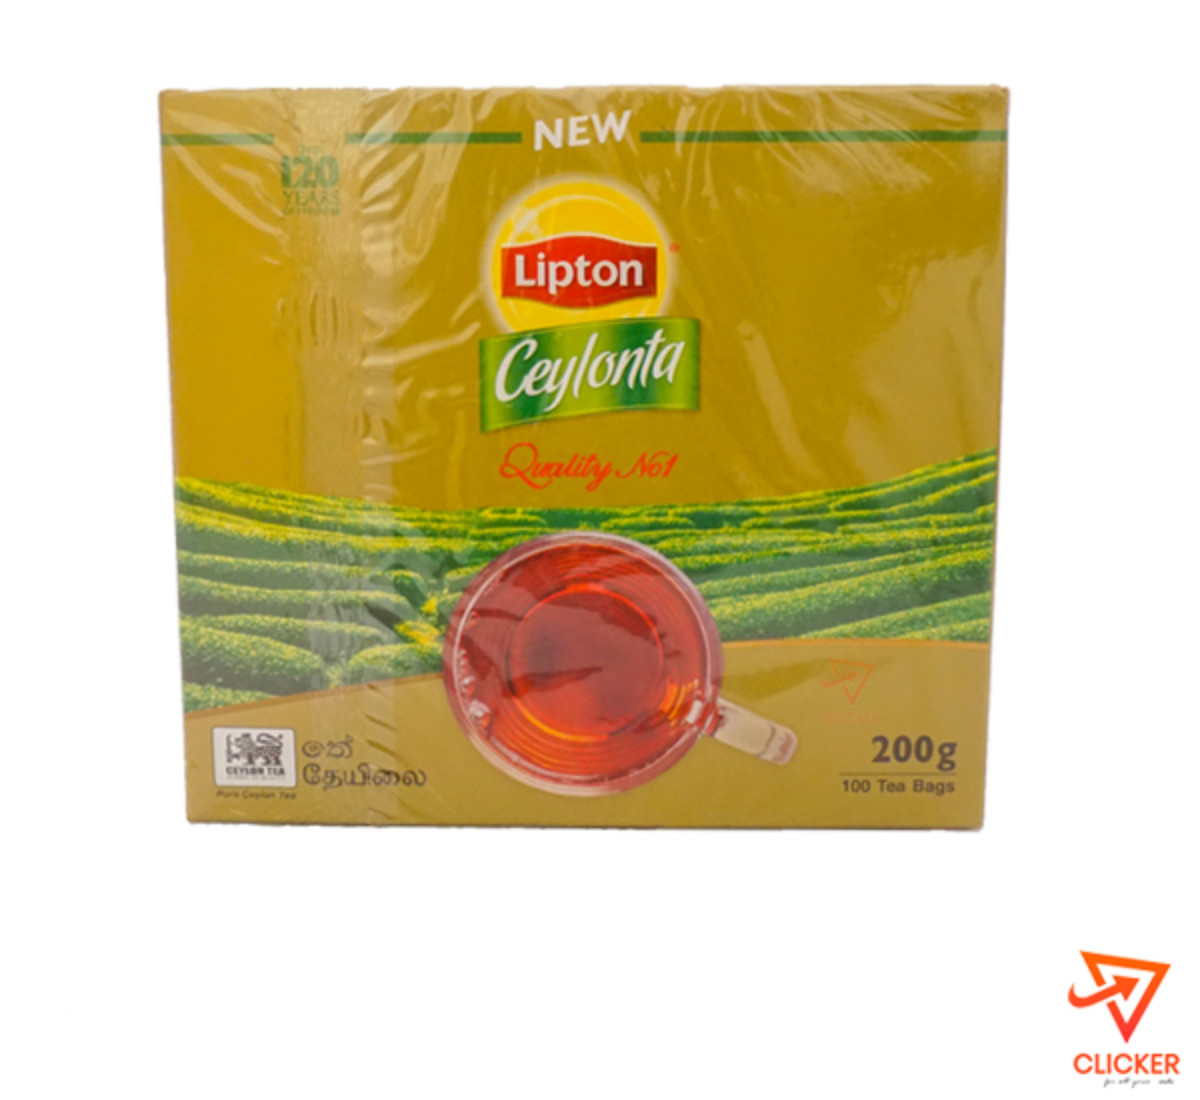 Clicker product 200g LIPTON green tea (20 tea bags) 984